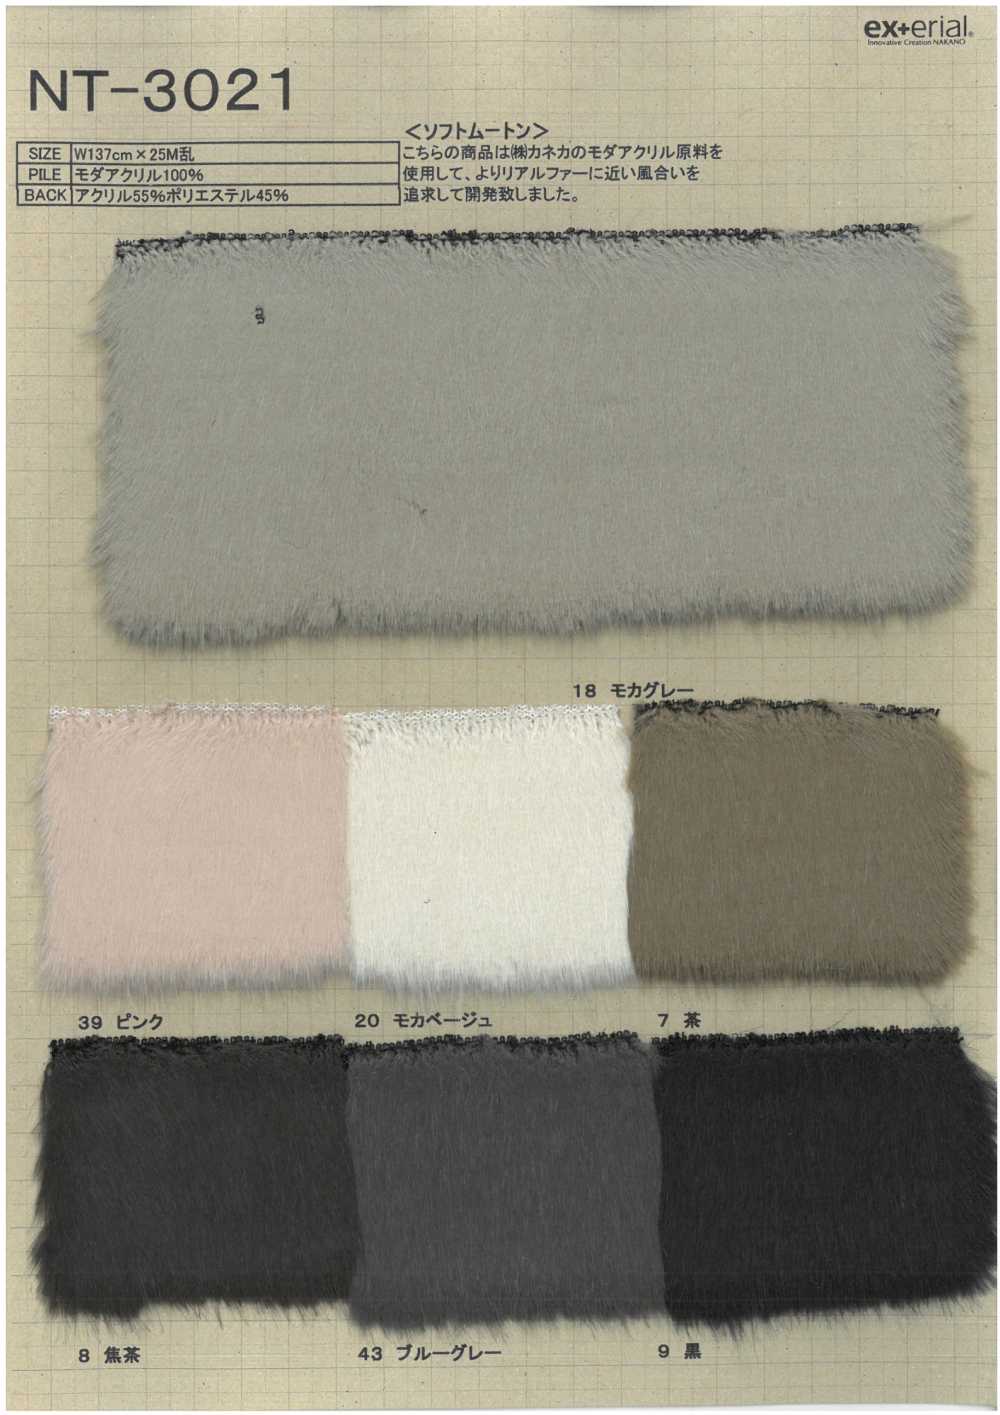 NT-3021 Fourrure Artisanale [Shearling Doux][Fabrication De Textile] Industrie Du Jersey Nakano